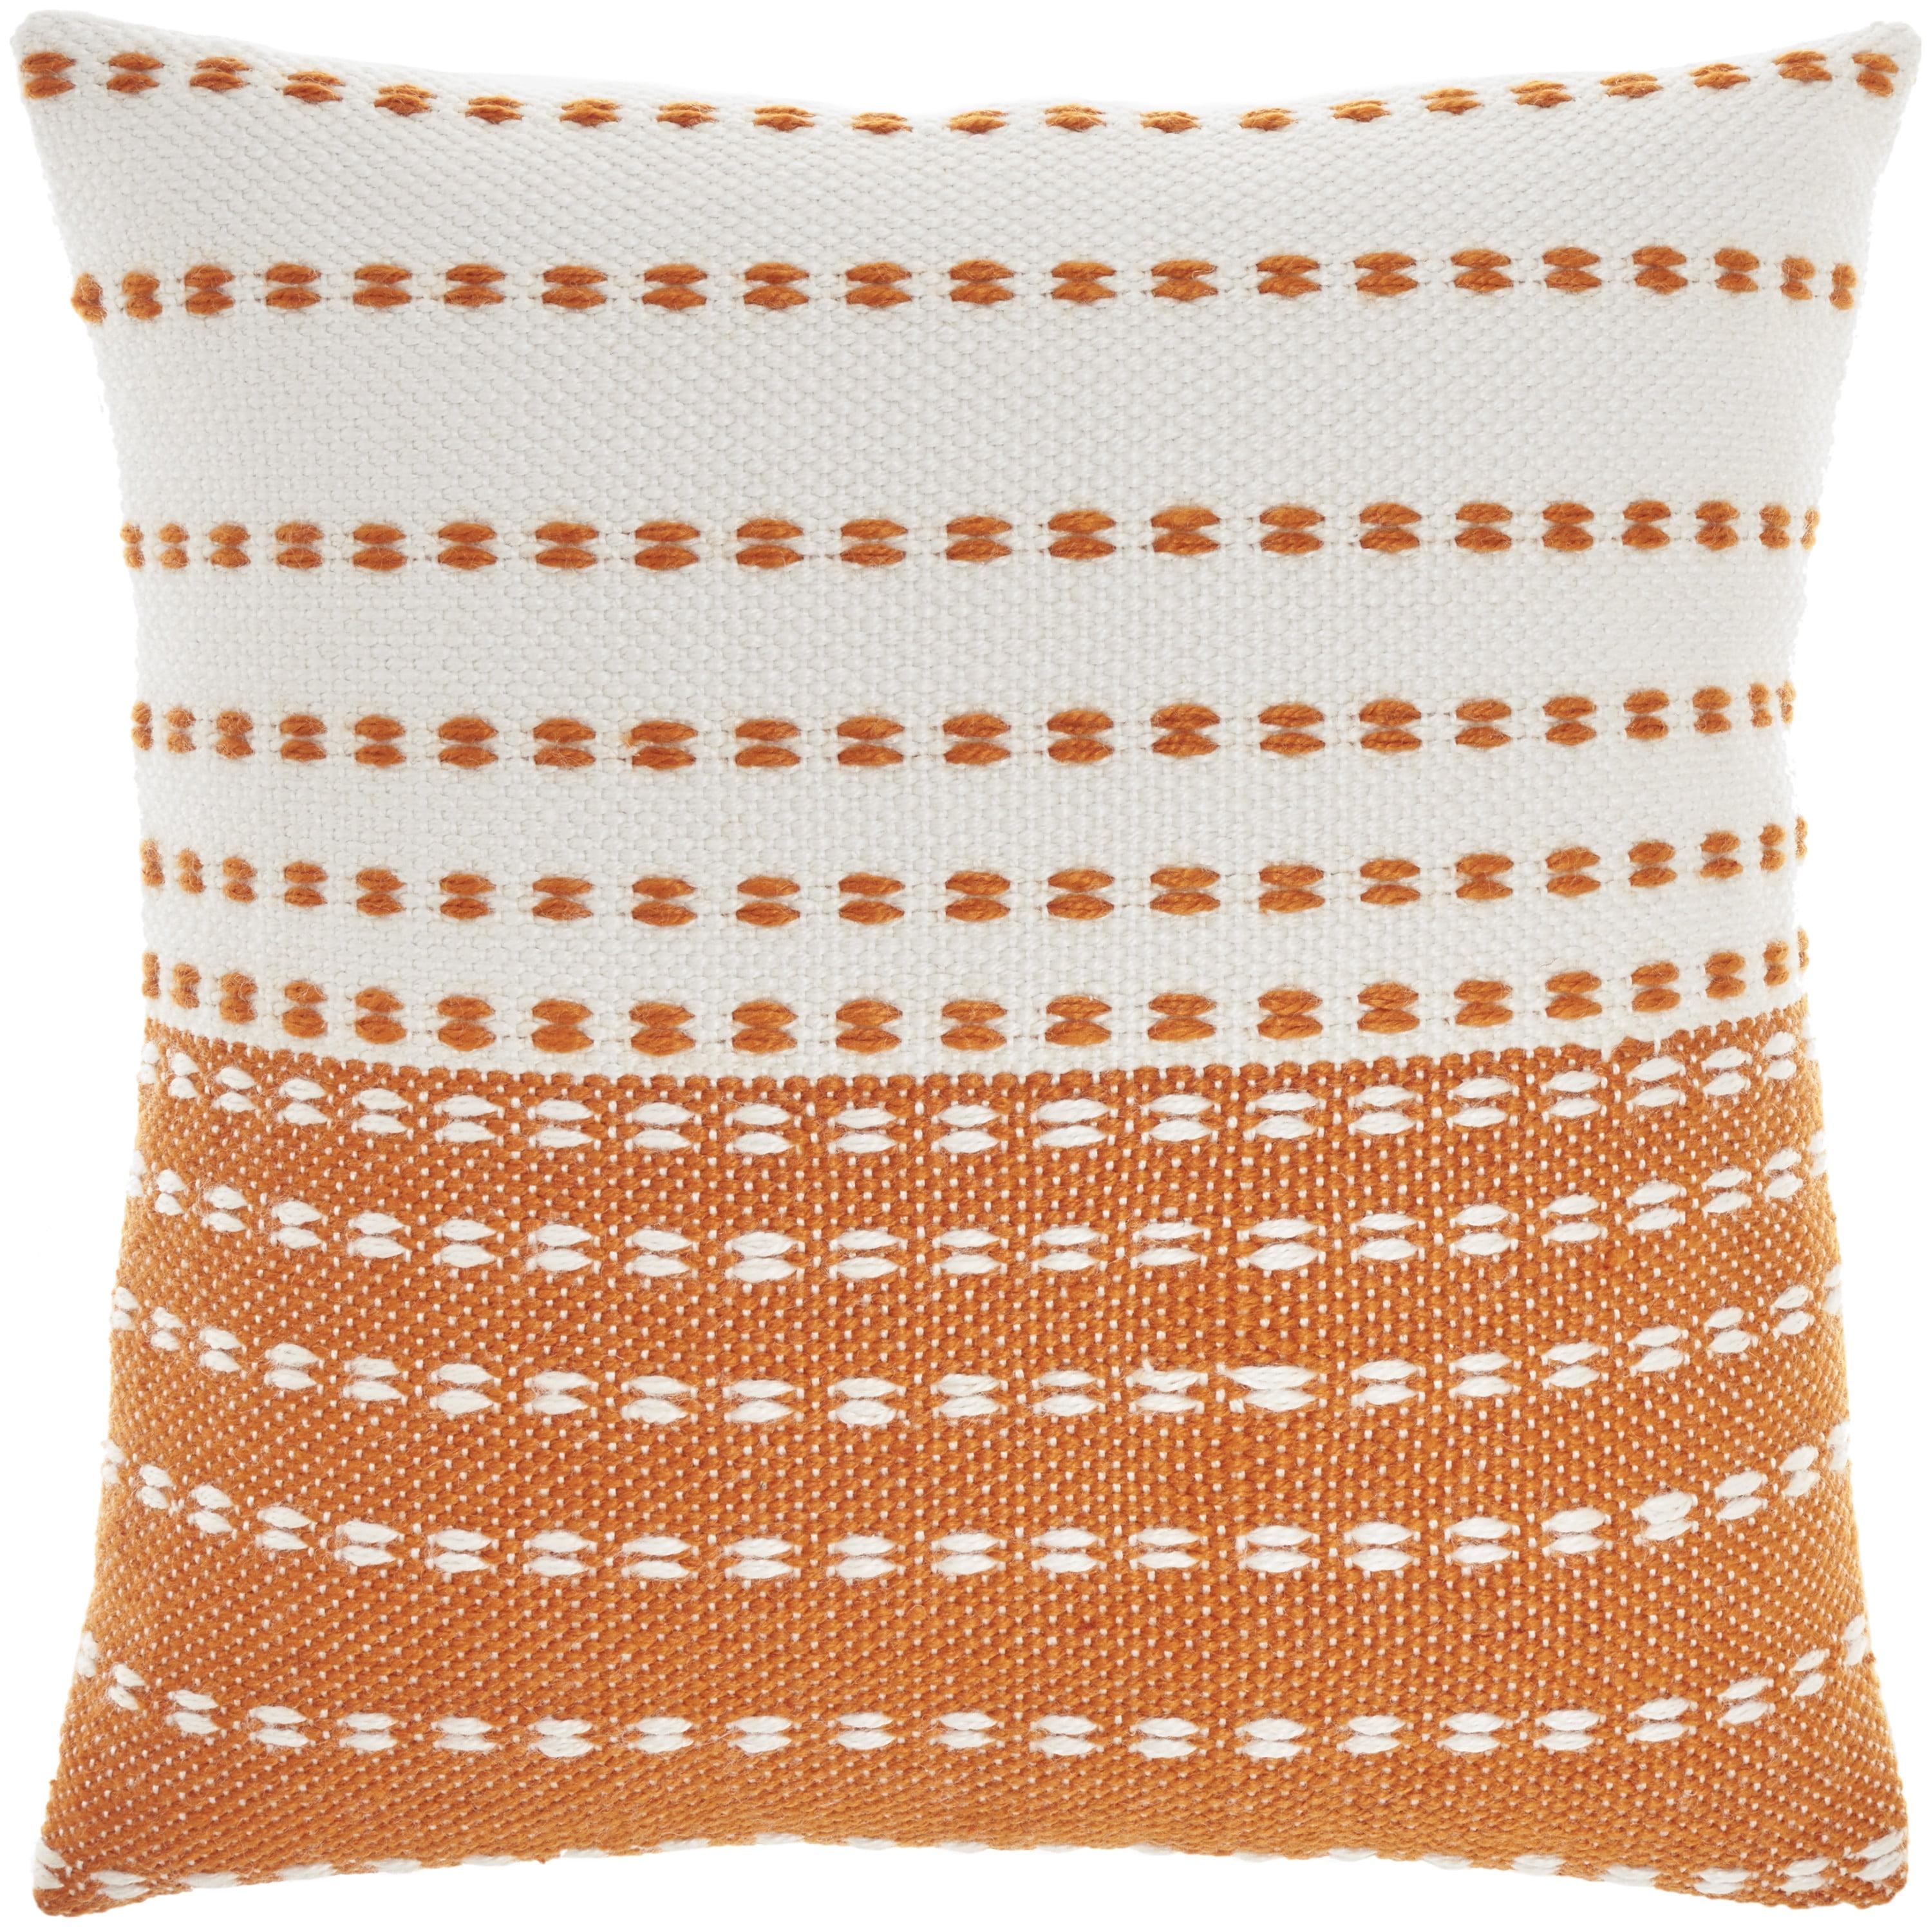 Bright Orange Stitched 18" Square Indoor/Outdoor Throw Pillow